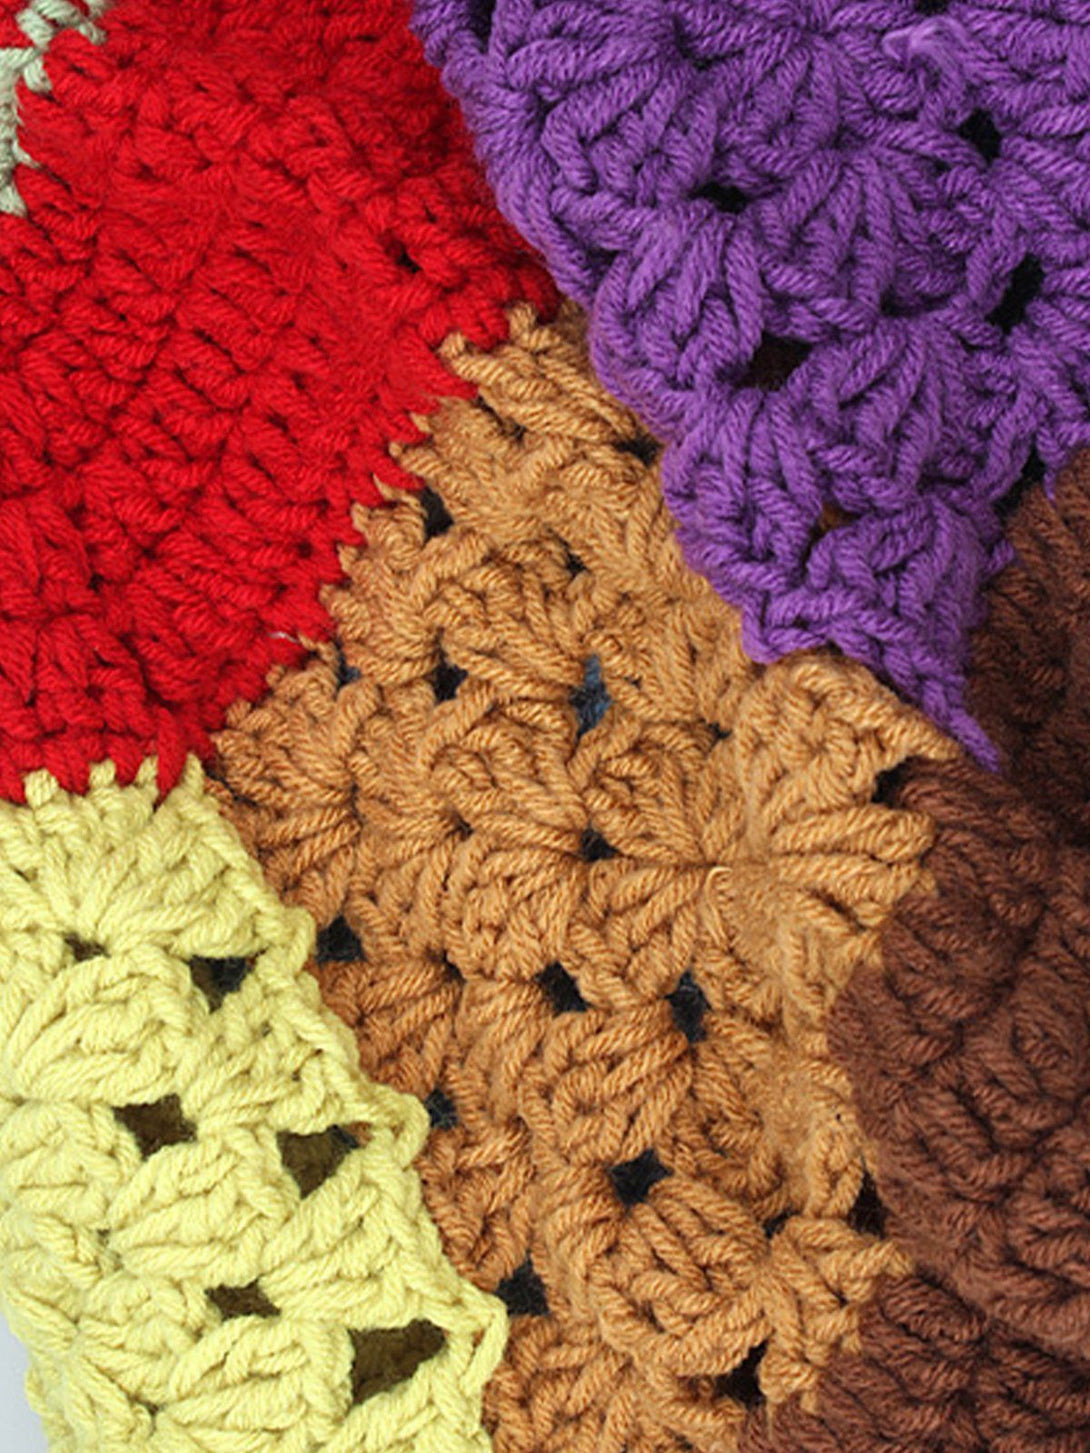 AlanBalen® - Handmade Crochet Open Knit Bucket Hat AlanBalen